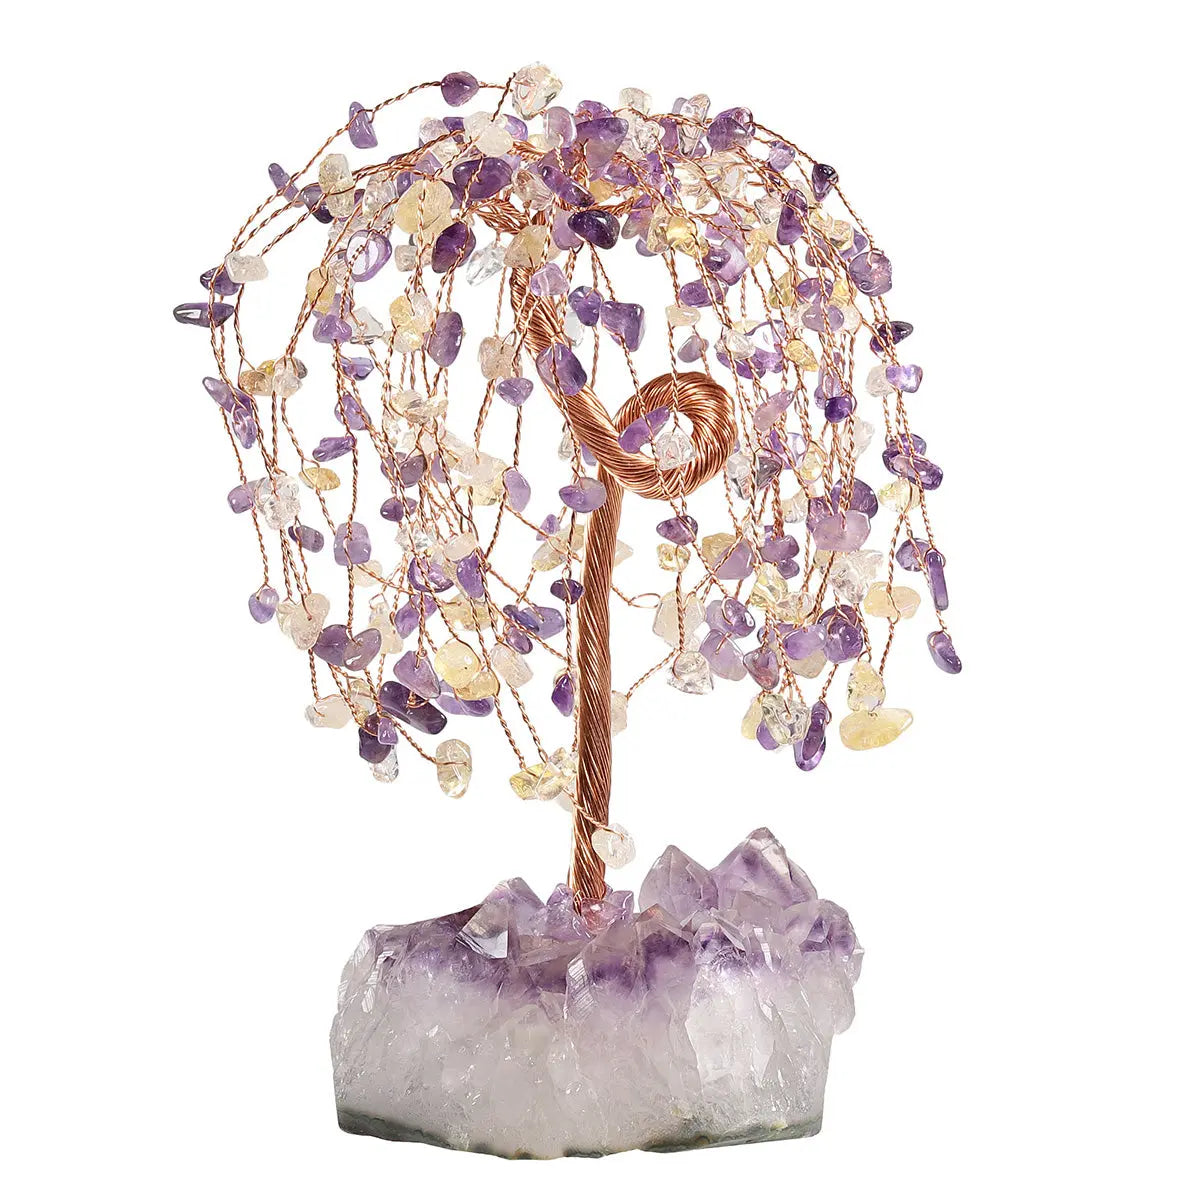 Willow Crystal Tree Energy Crystal Amethyst Cluster Base Crafts, Amethyst, Rose Quartz, Peridot Crystals Tree - Bonsai Tree Creative Decorative Ornaments Healing Crystal Home